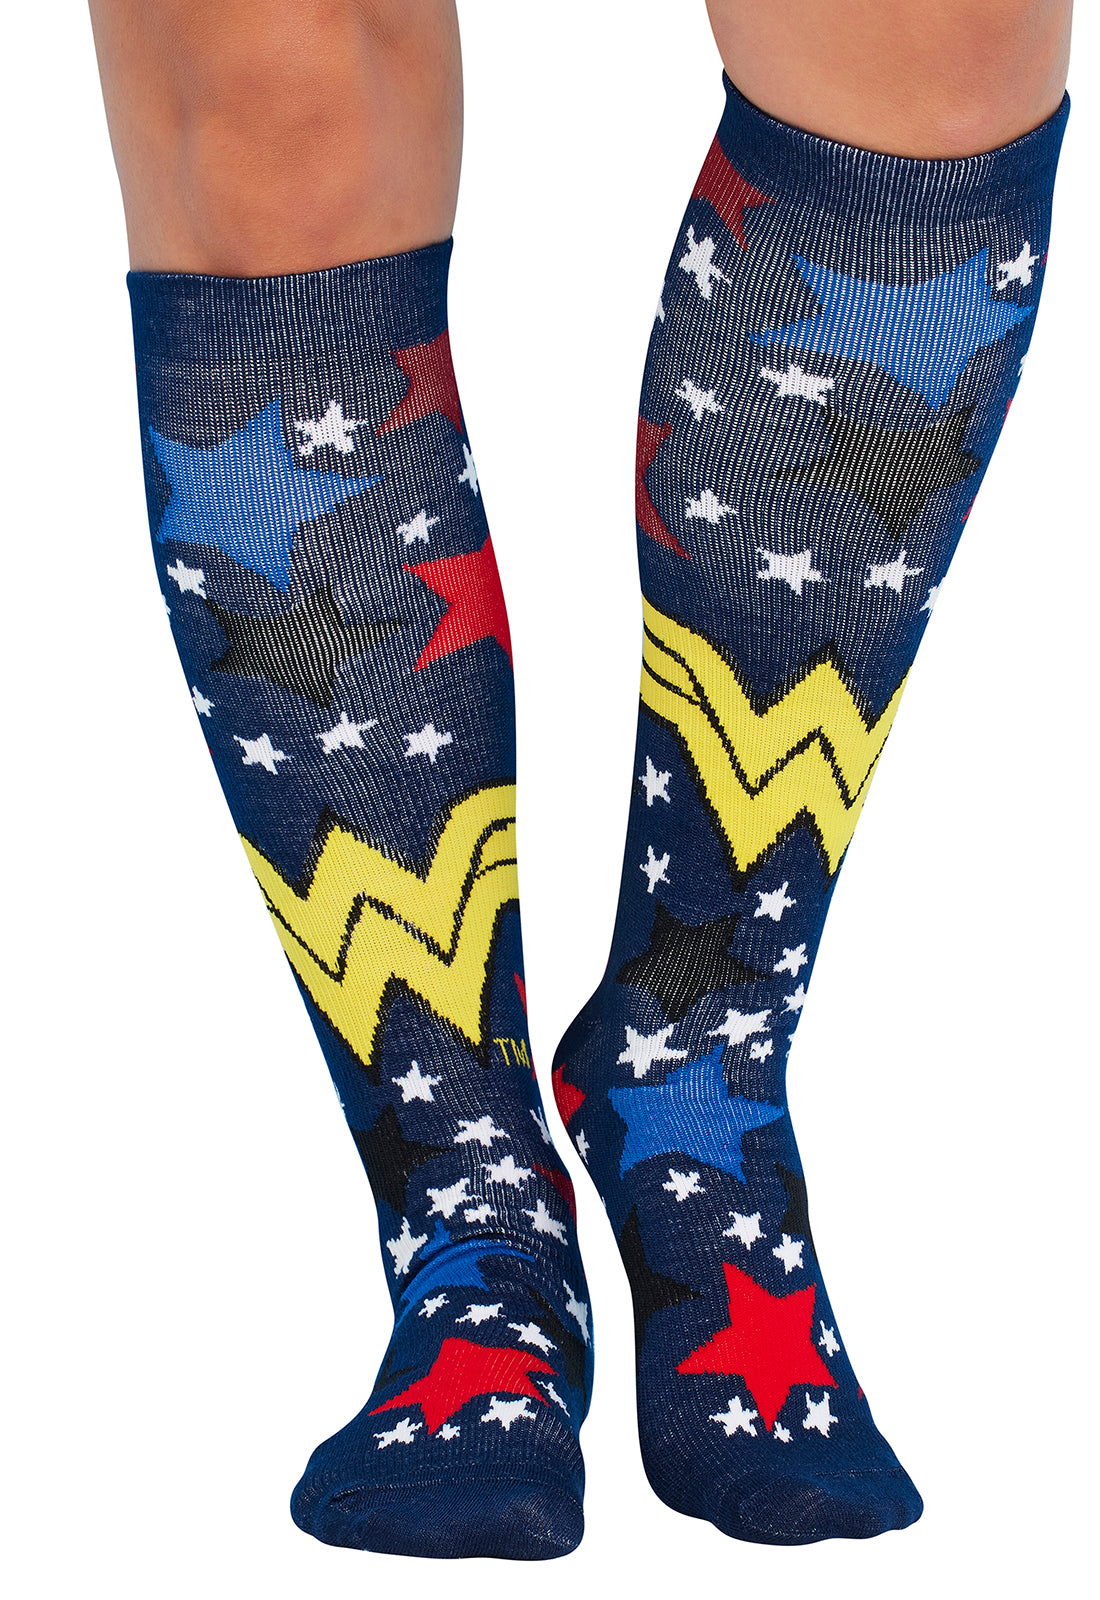 Women's 10-15mmHg Compression Socks Cartoon and Superhero Prints Compression Socks Cherokee Legwear Wonder Stars  